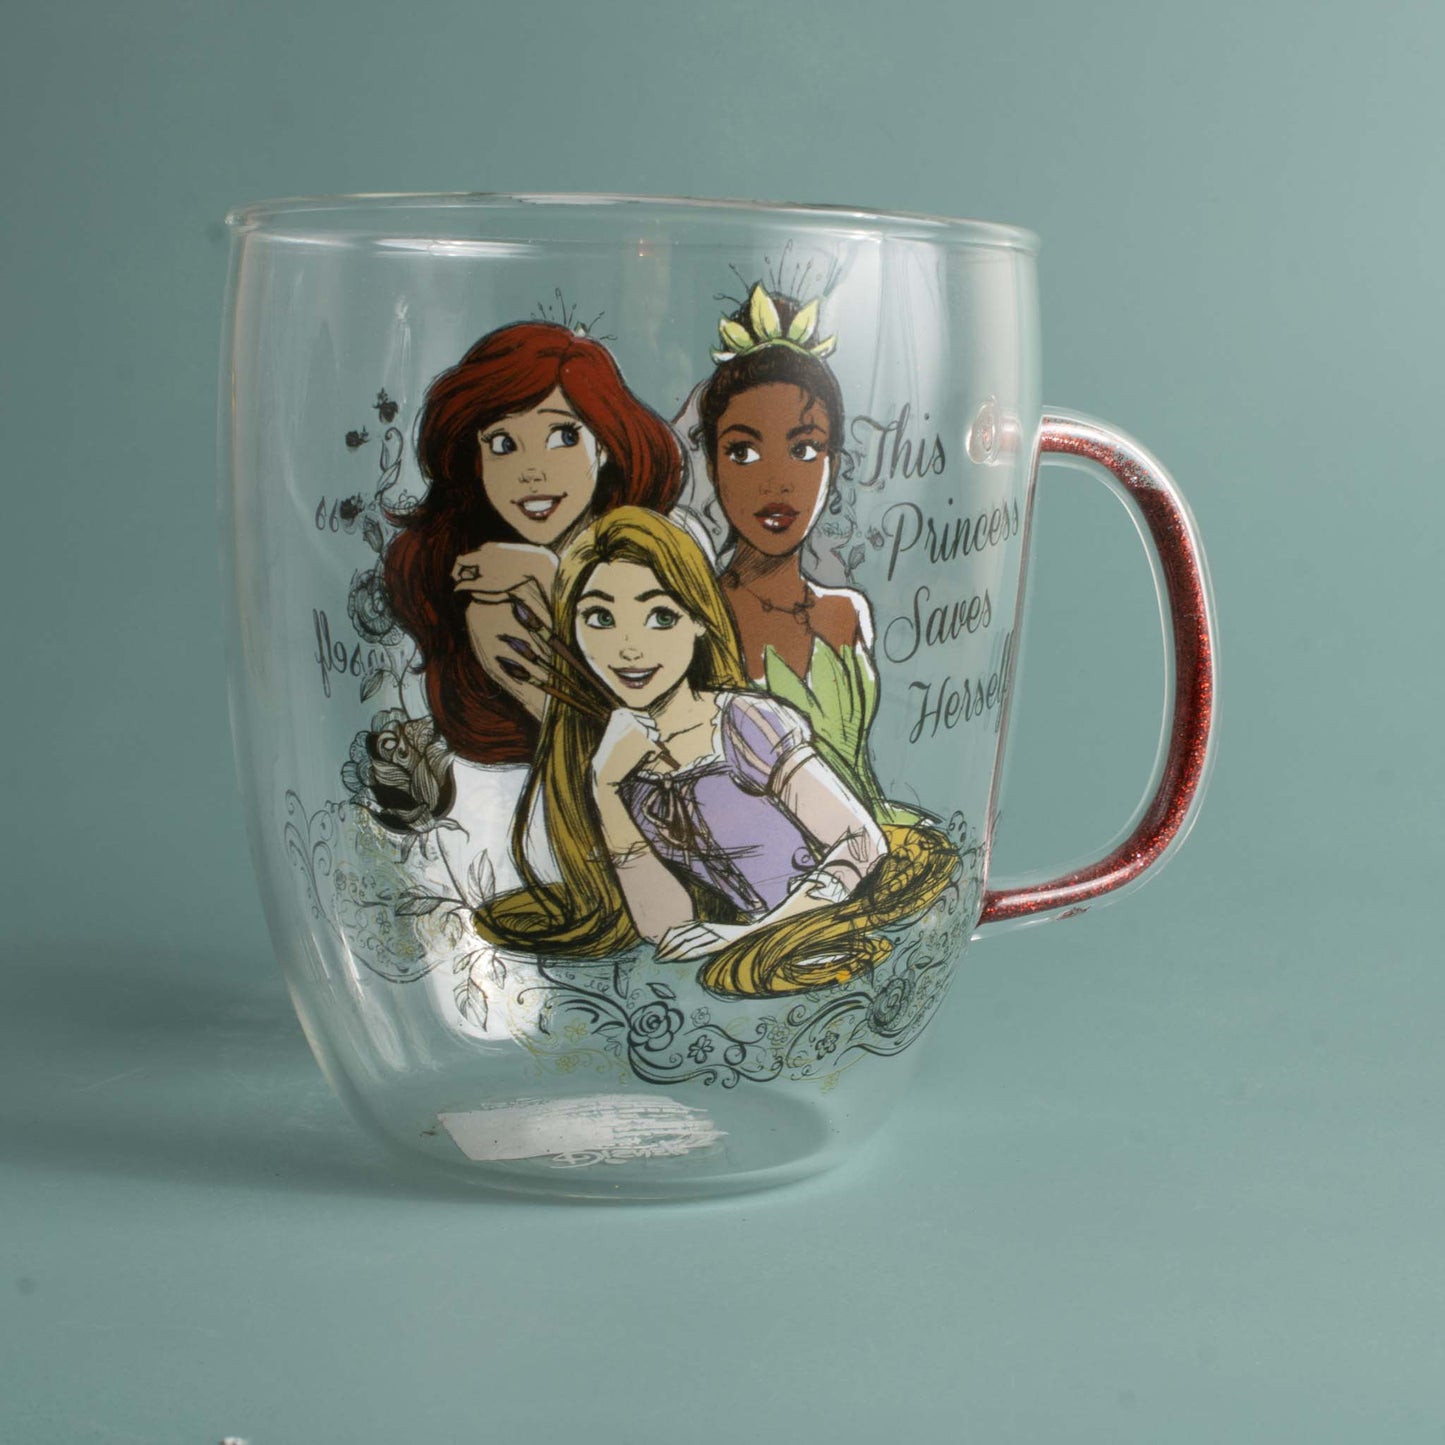 Disney Princess Vinyl Cups - Girl Loves Glam